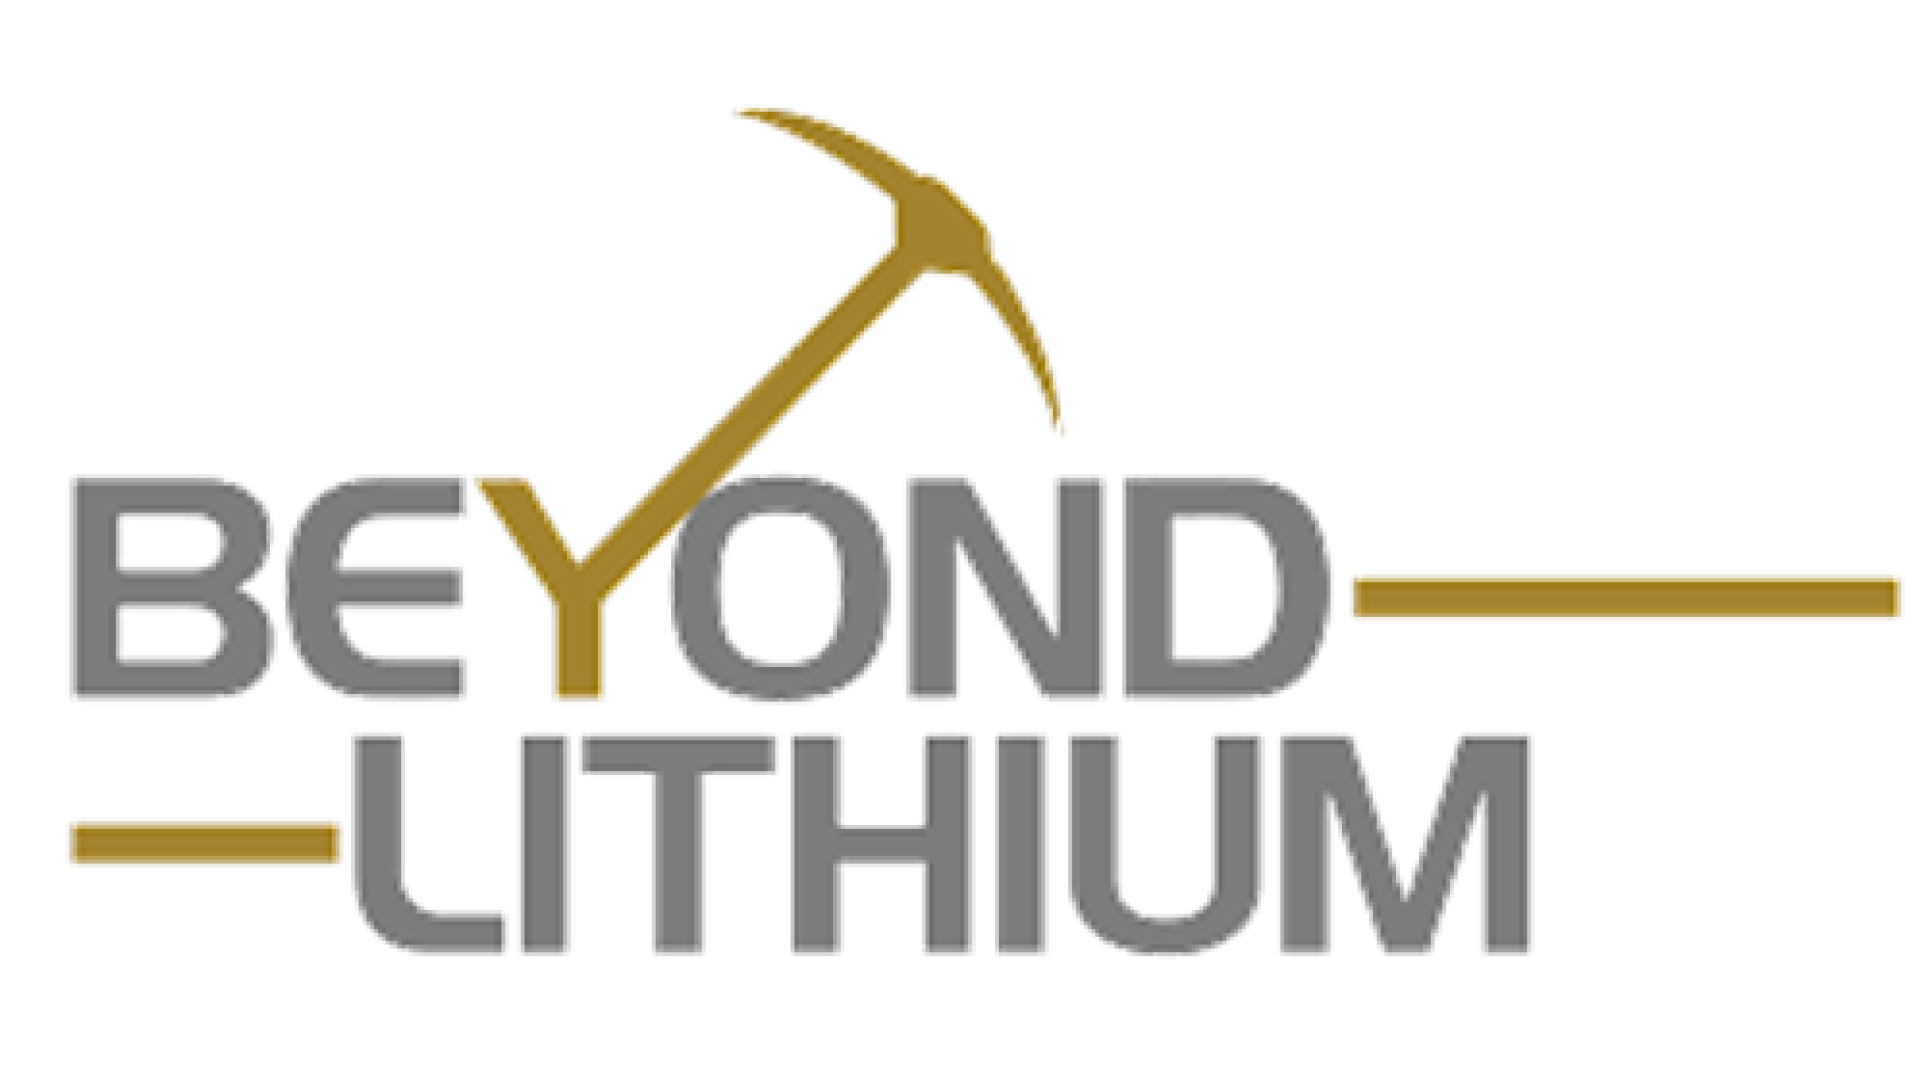 Beyond Lithium Inc.